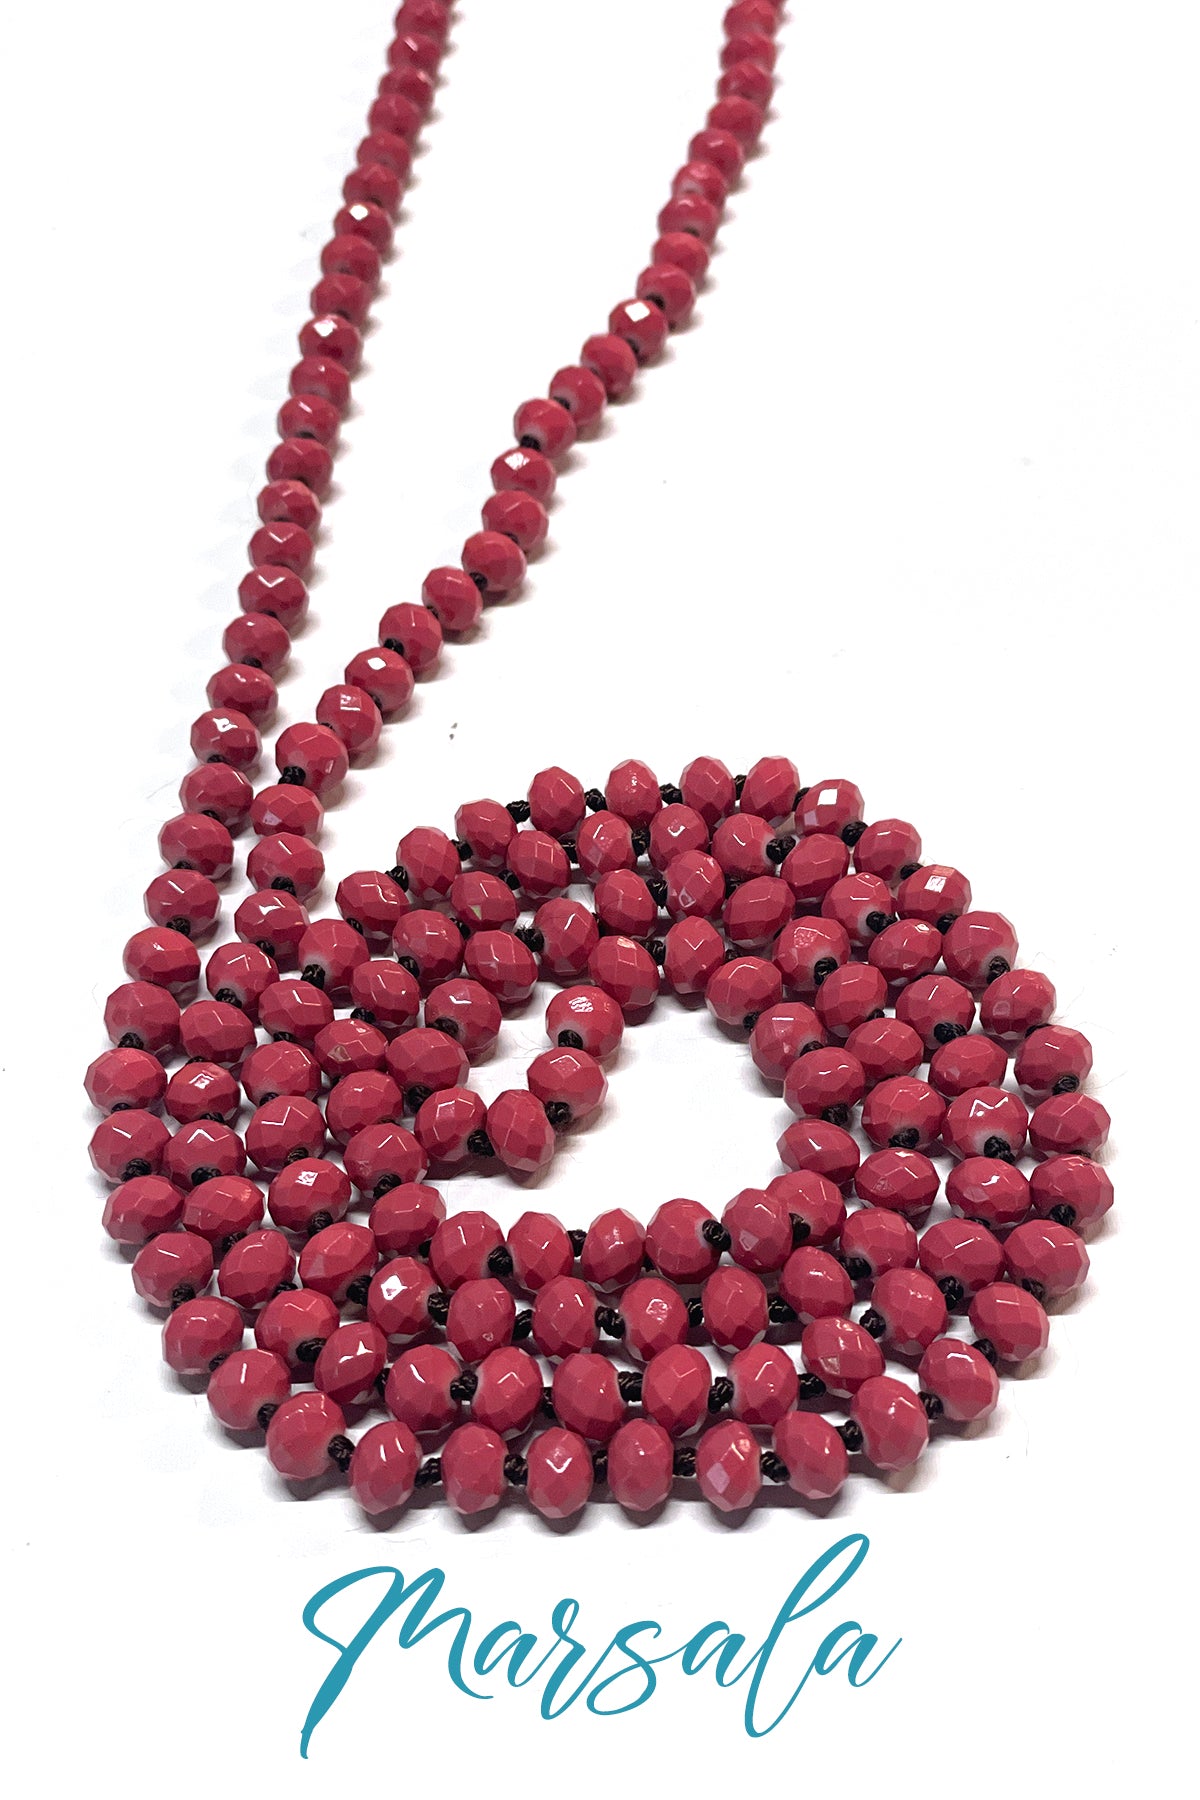 Wrap Necklaces 60" - All Colors jewelry ViVi Liam Jewelry Marsala 